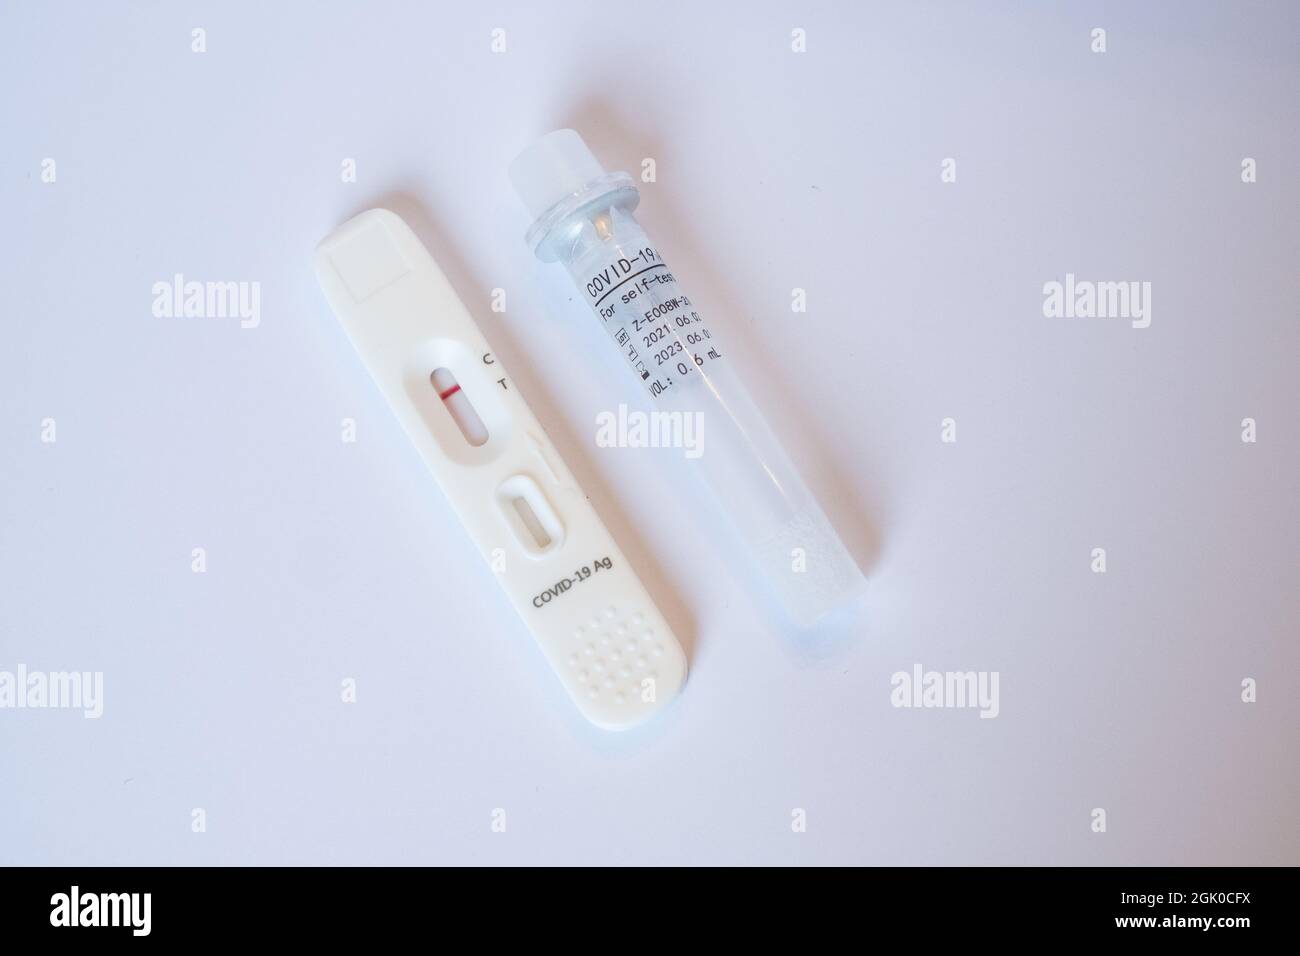 COVID-19 Ag Test kit for self-testing on white background. Corona virus diagnosis. Stock Photo